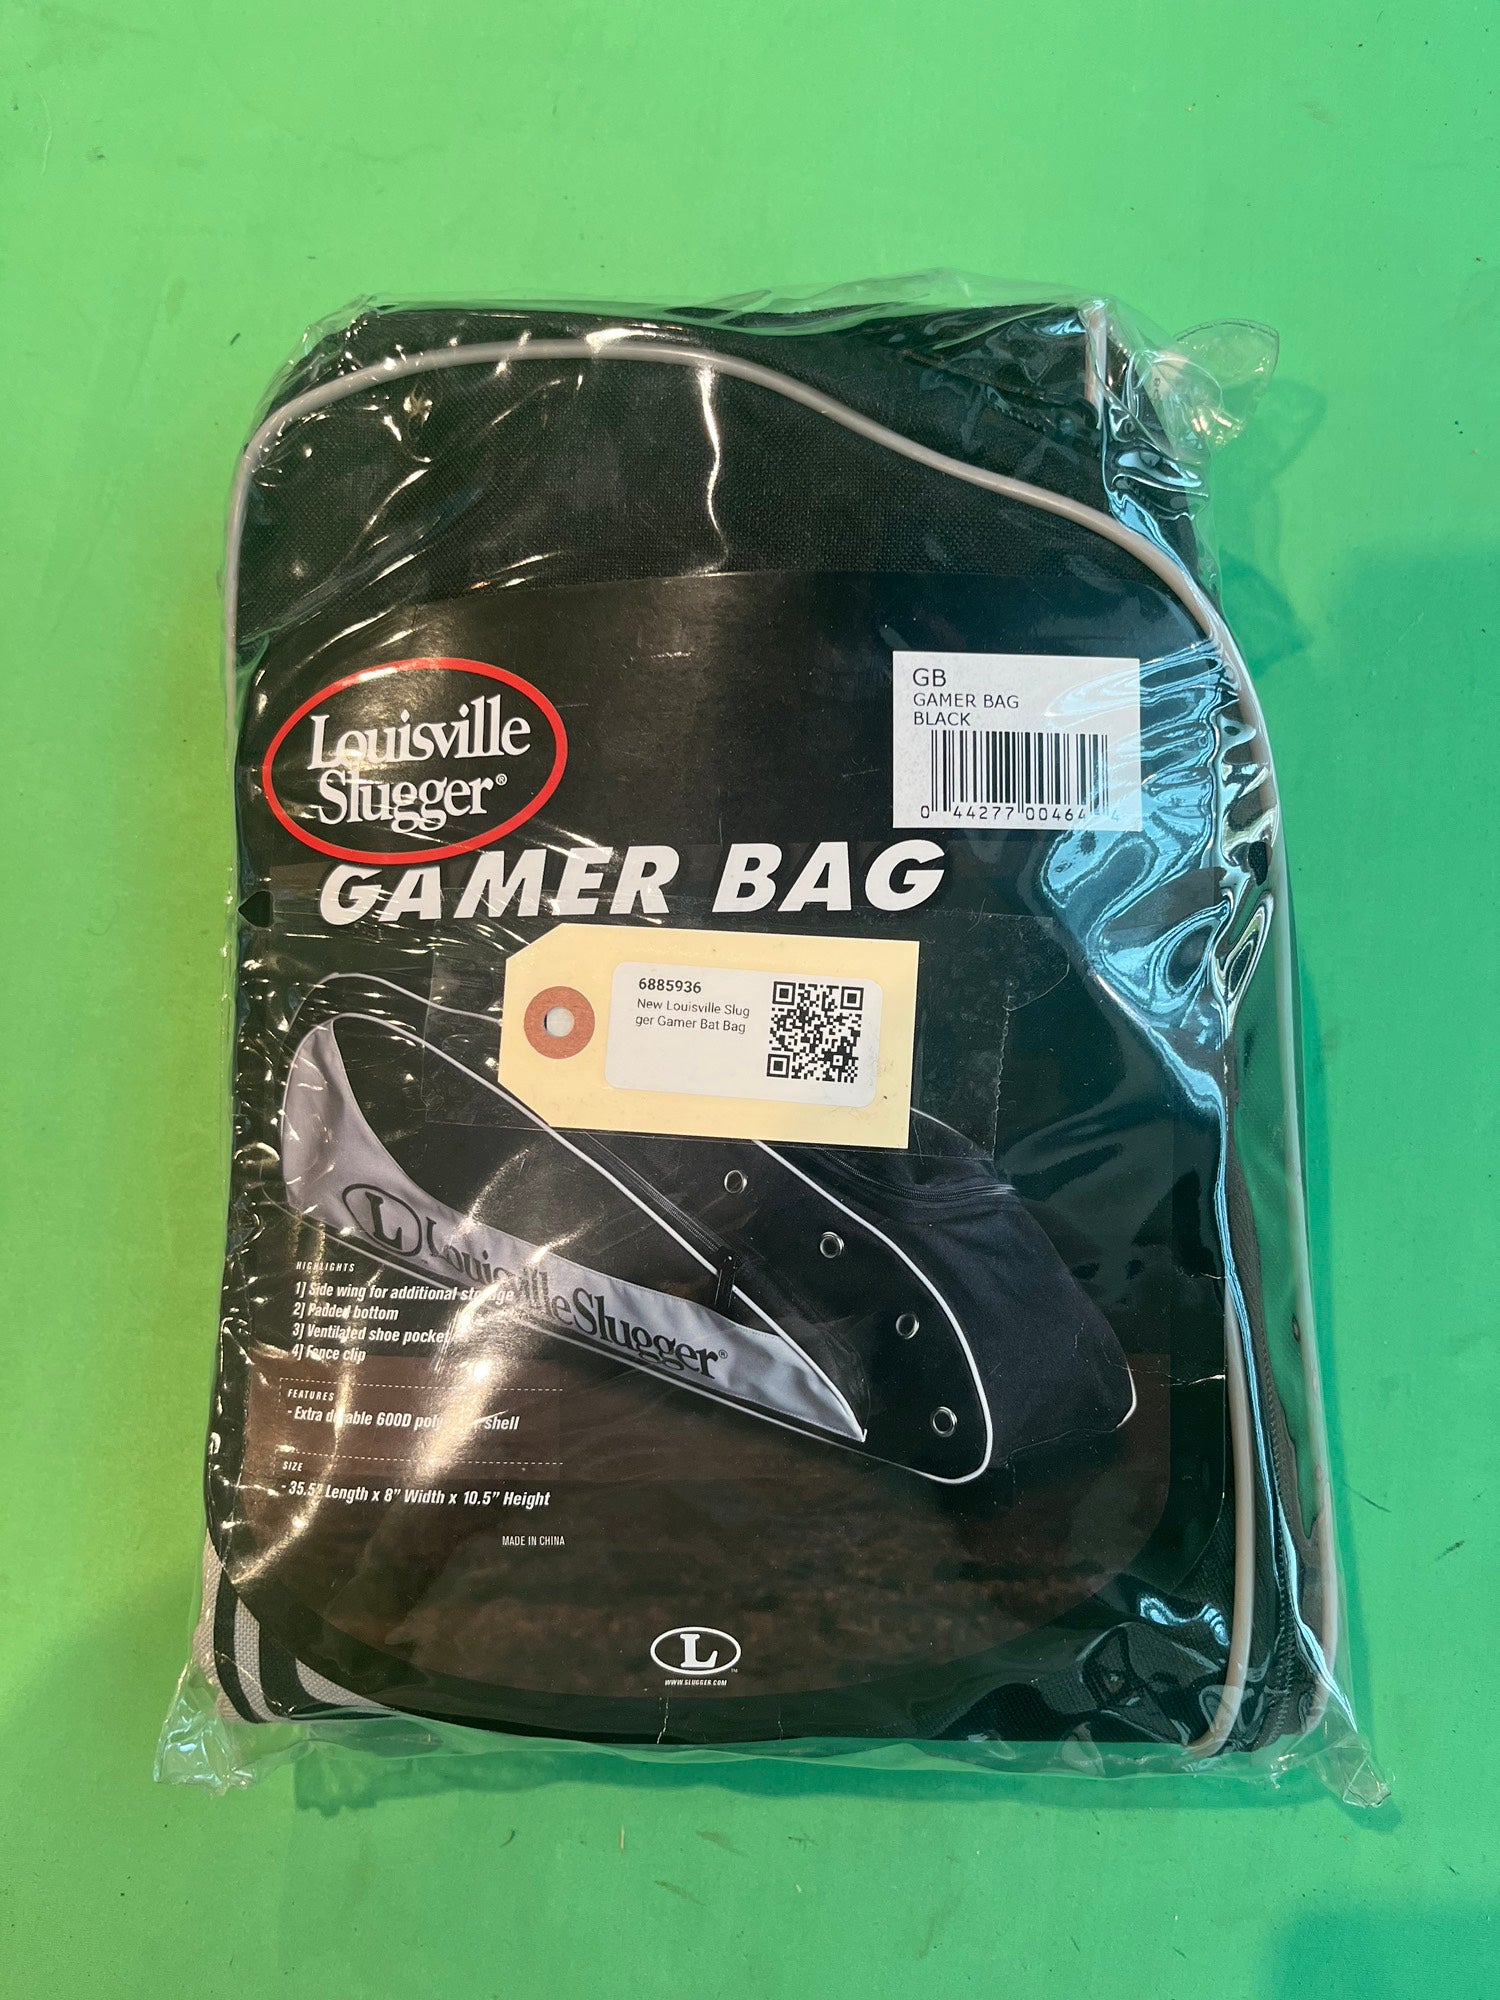 Louisville Bats Clear Tote Bags 